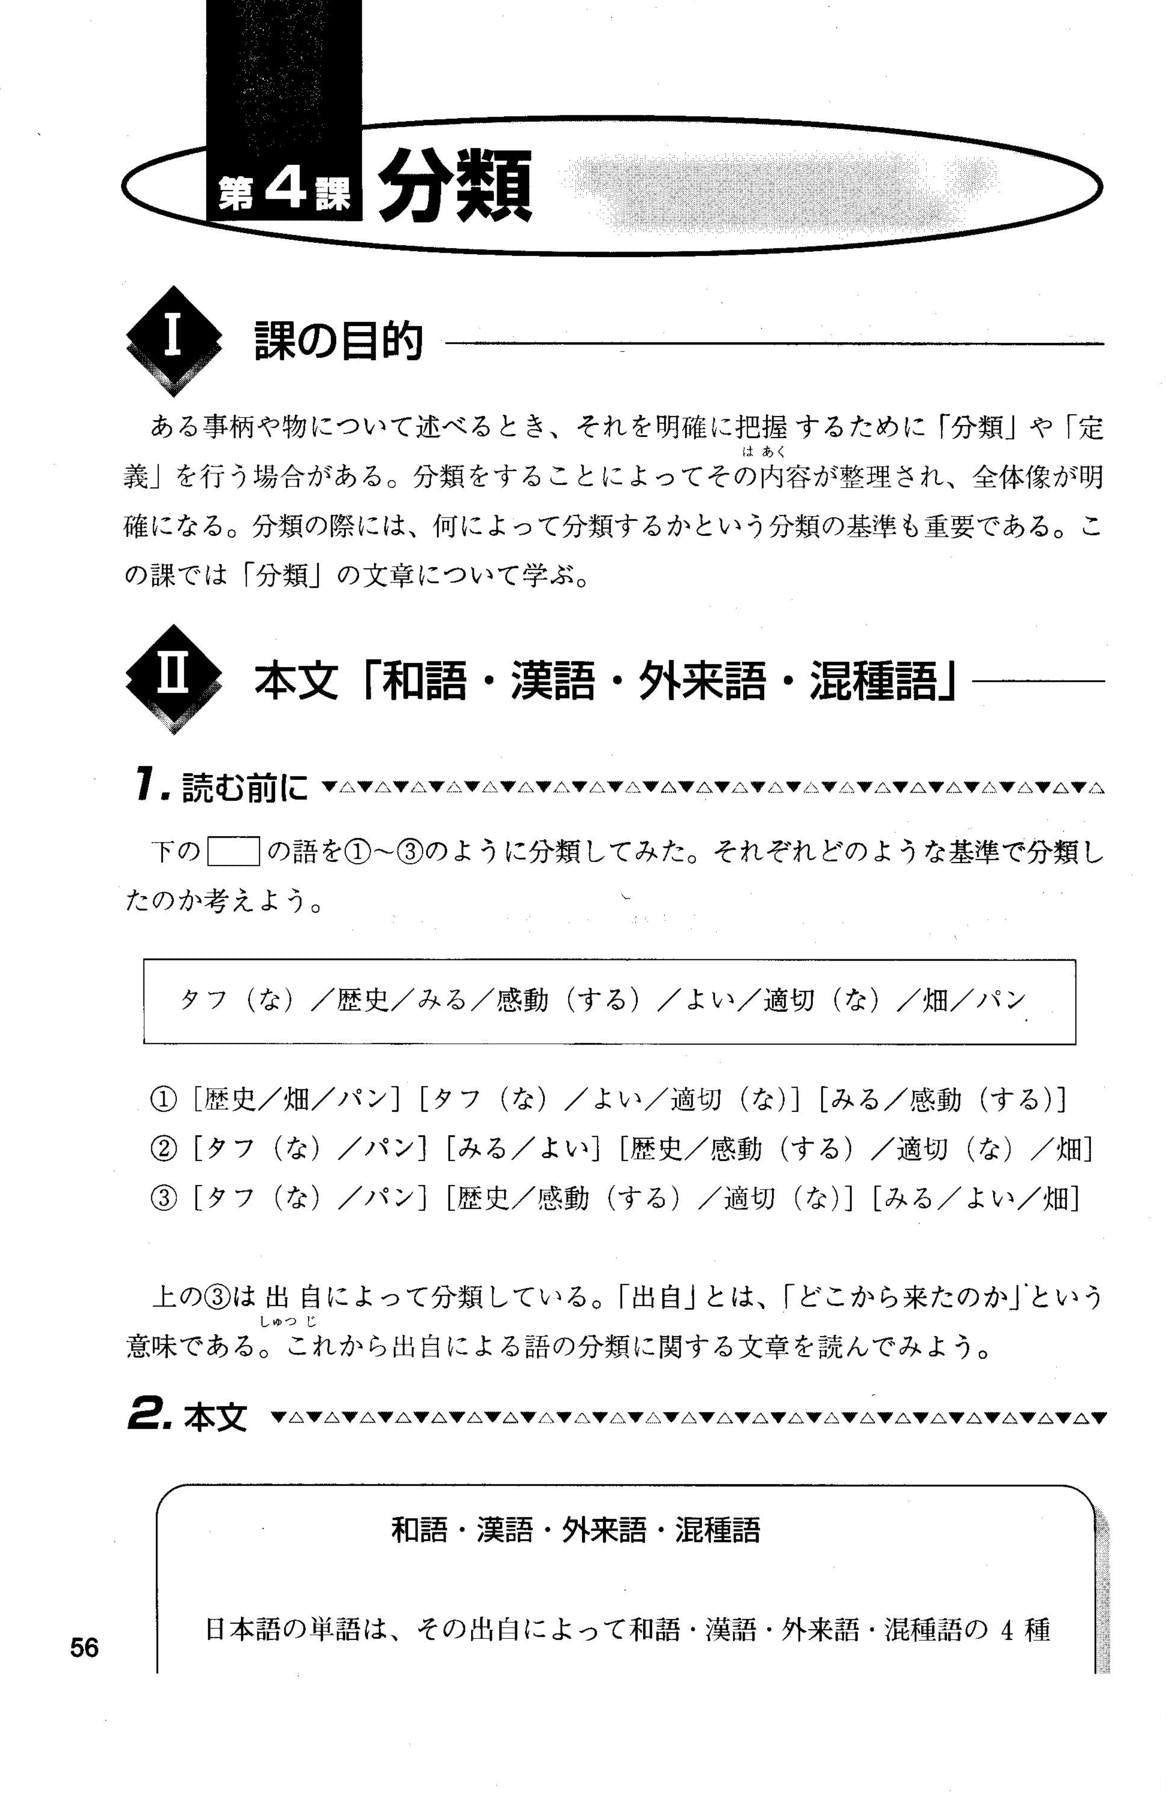 How To Write Japanese Essays Omg Japan